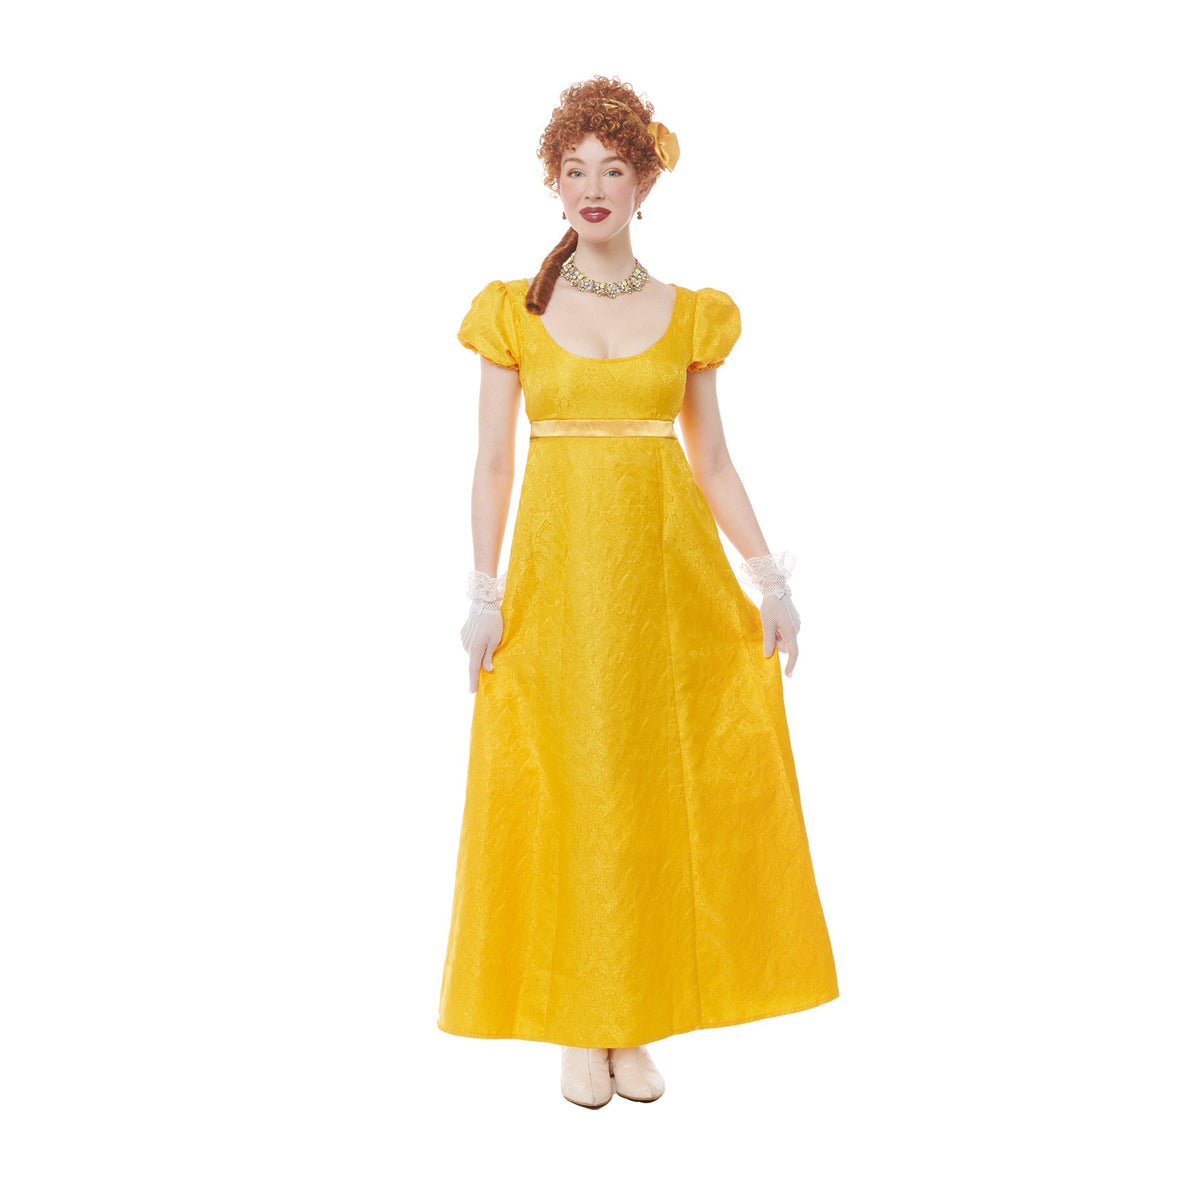 COSTUME CULTURE BY FRANCO Costumes Regency Debutante Costume for Adults, Yellow Dress, Bridgerton